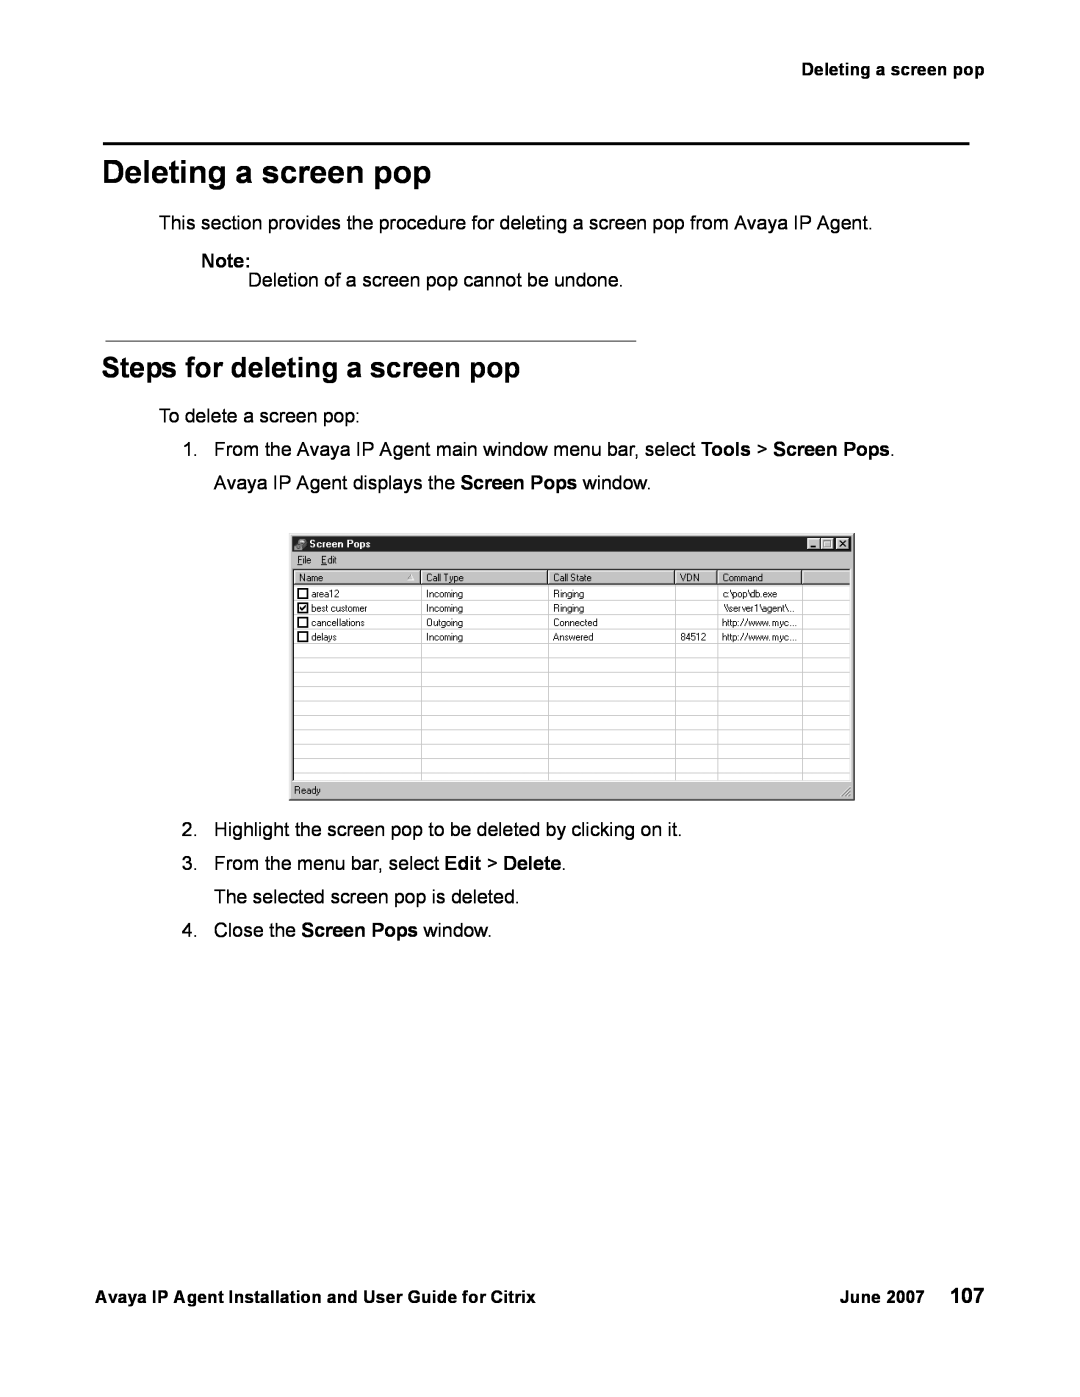 Avaya 7 manual Deleting a screen pop, Steps for deleting a screen pop 